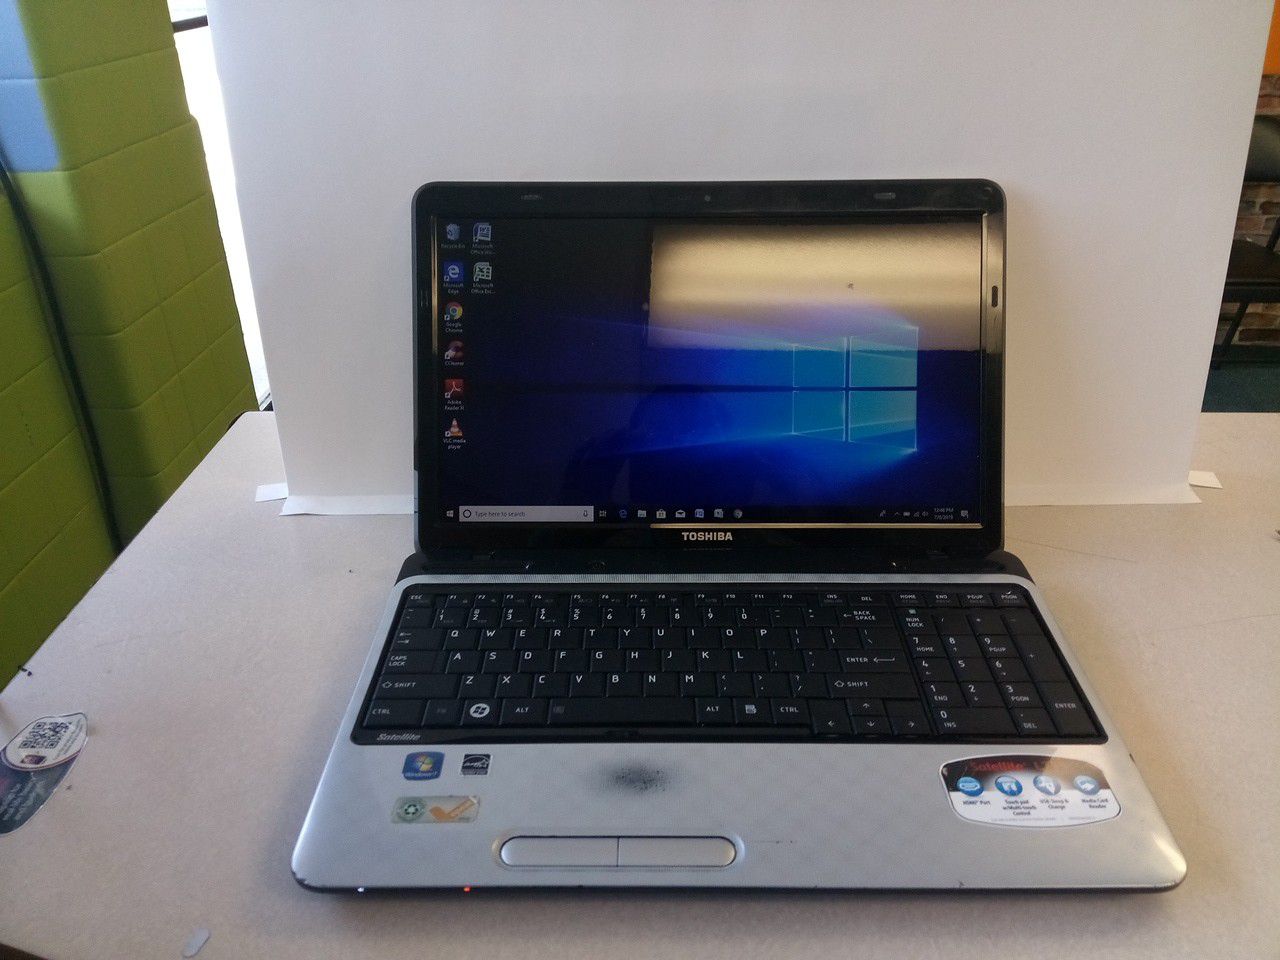 Quad Core Toshiba Laptop.